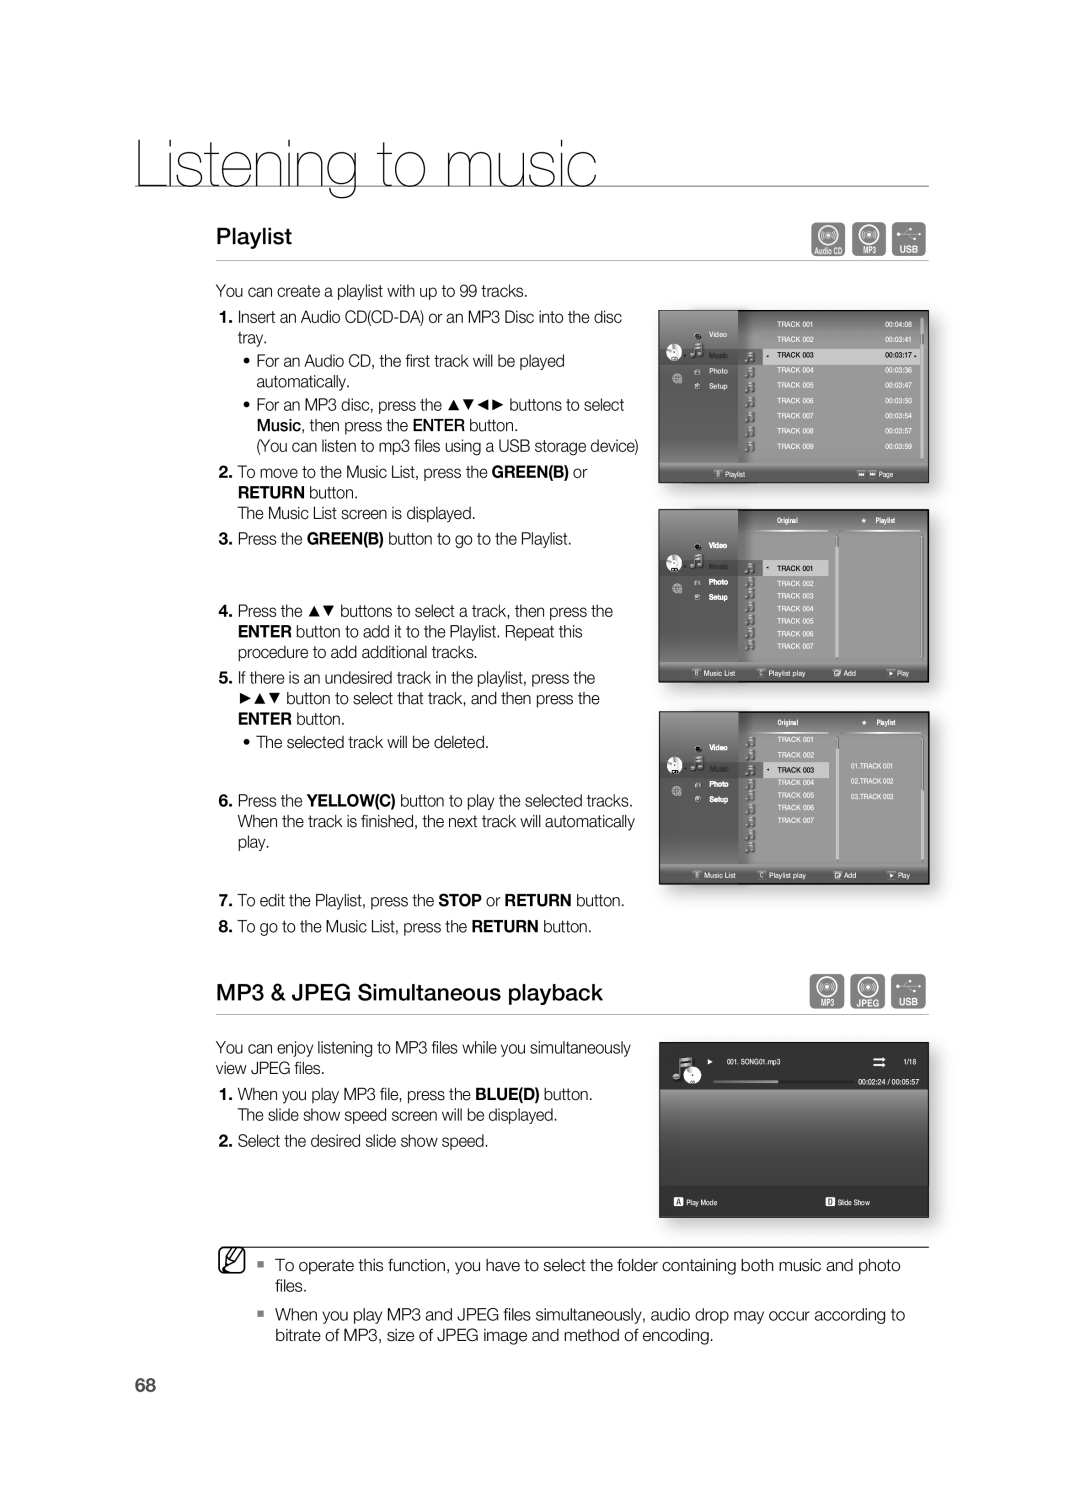 Samsung HT-BD8200 user manual Playlist, MP3 & JPEG Simultaneous playback, Listening to music 